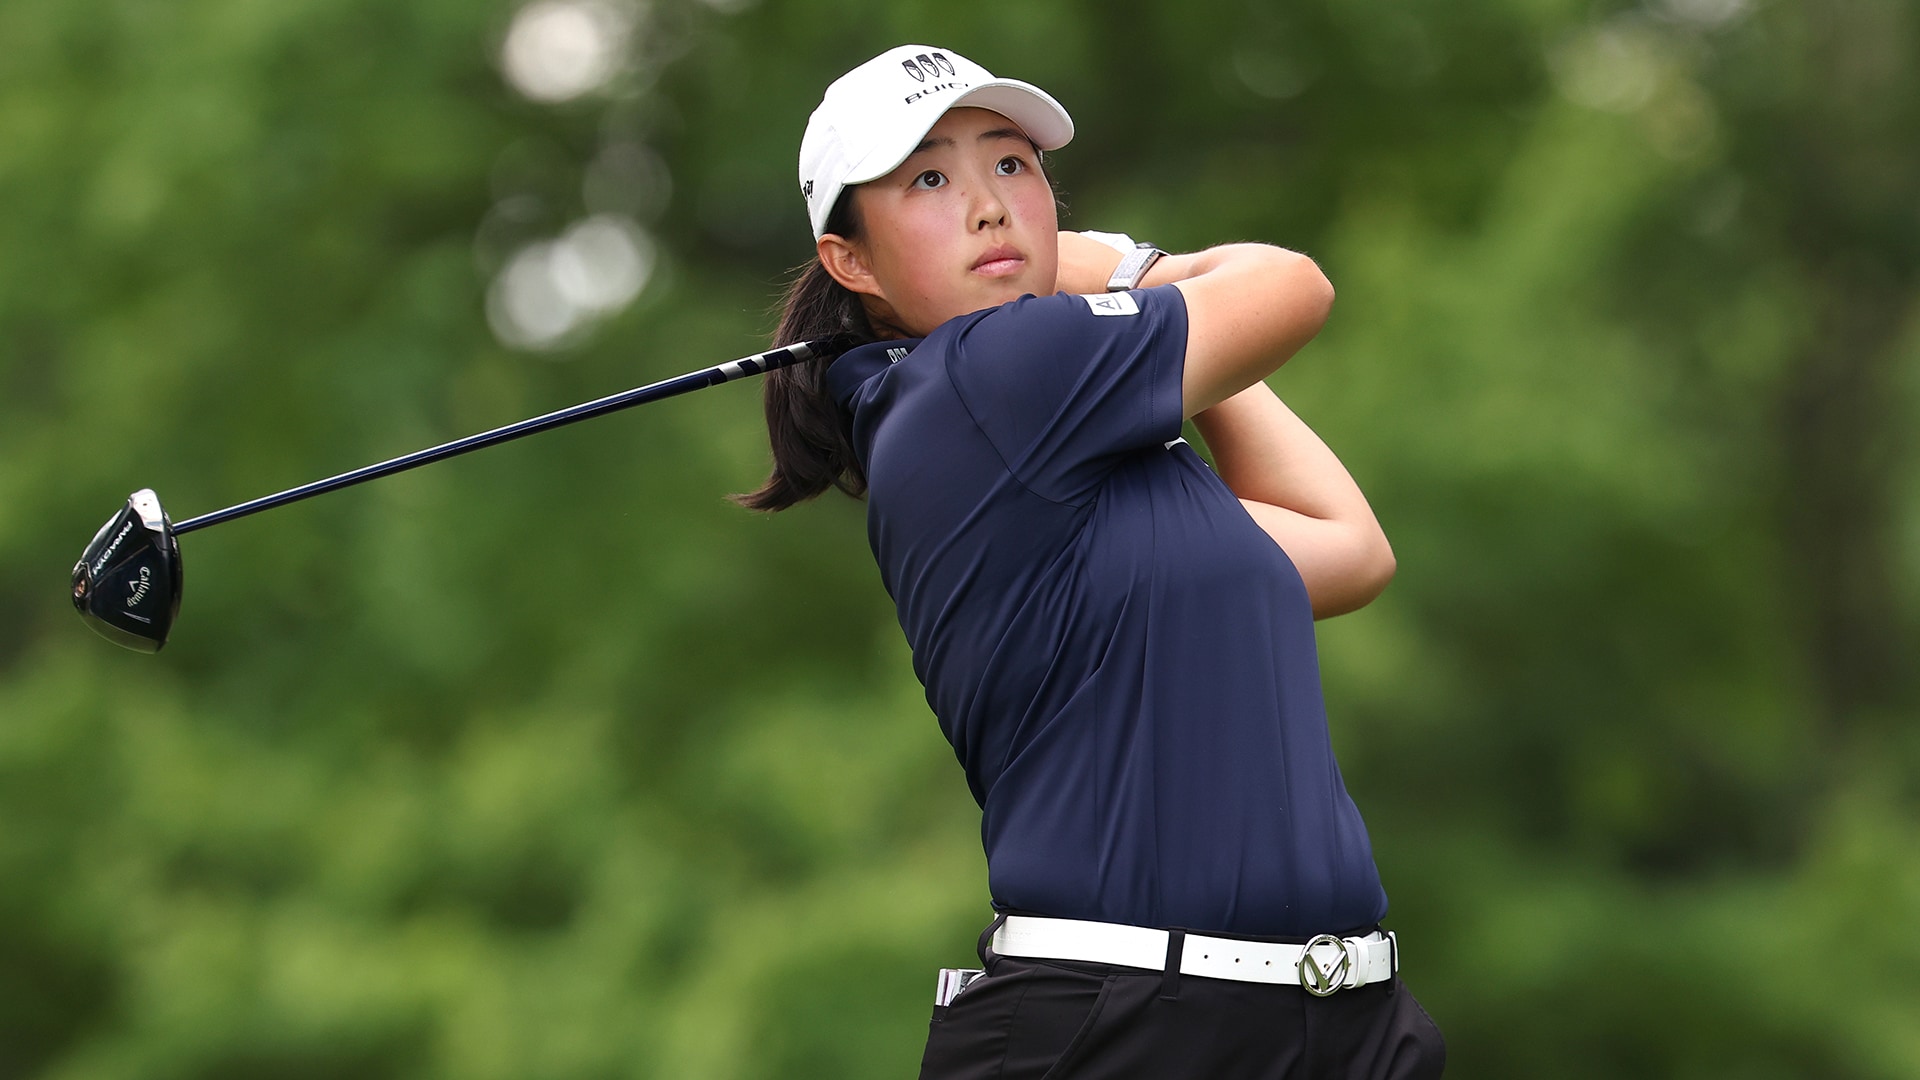 China’s Ruoning Yin, 20, birdies final hole to win KPMG Women’s PGA